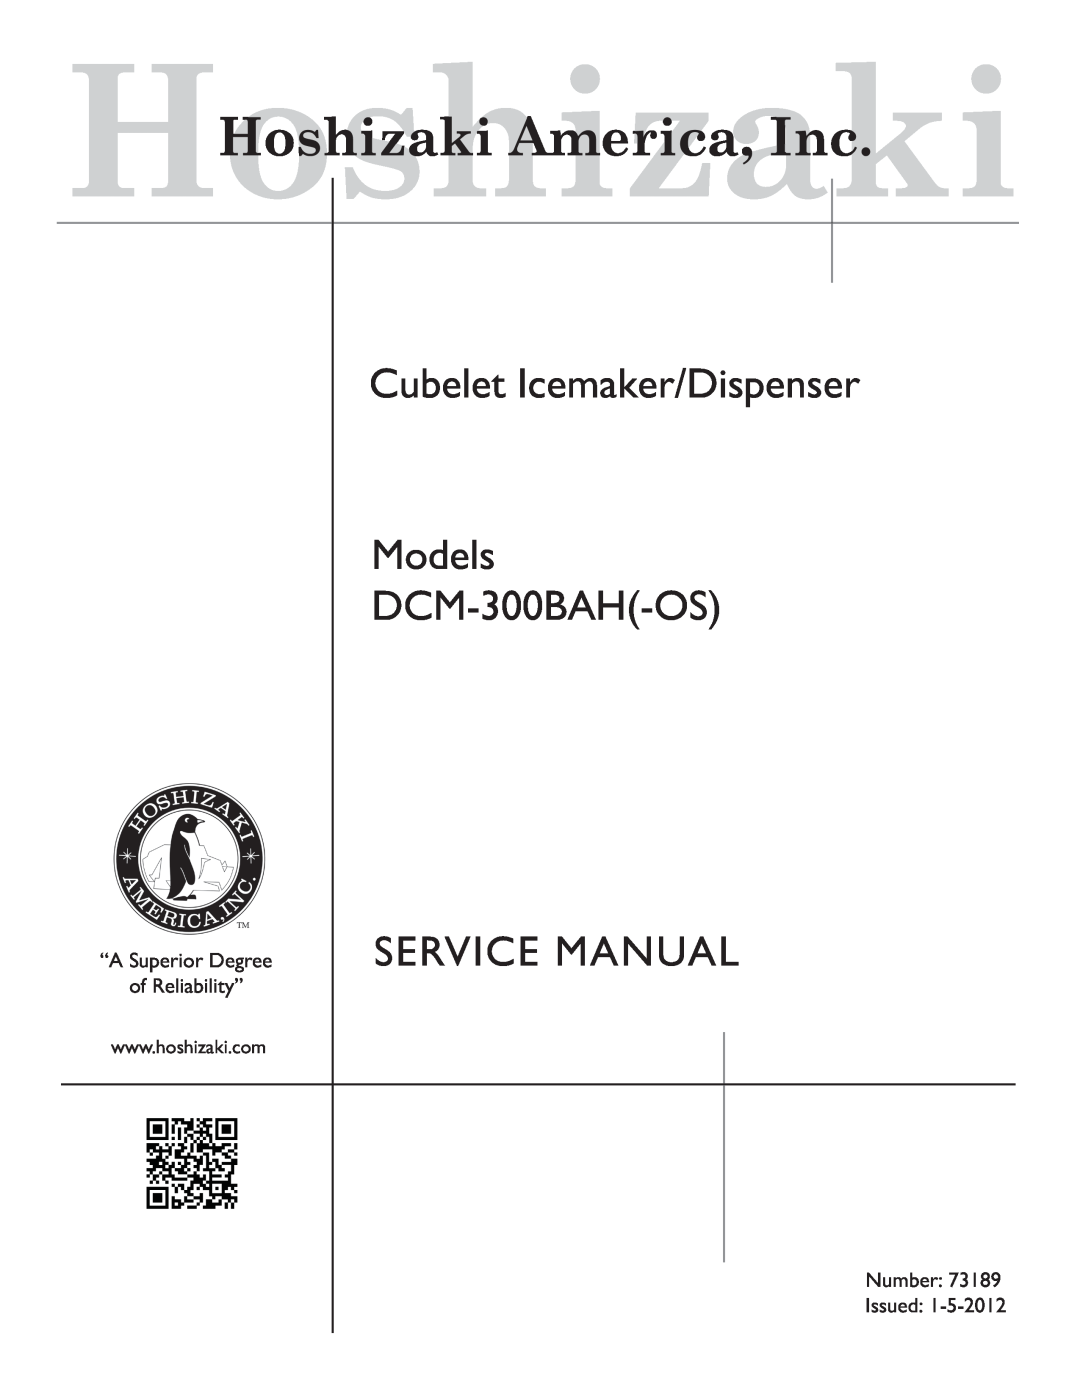 Hoshizaki DCM 300BAH(-OS) service manual HoshizakiHoshizaki America, Inc 